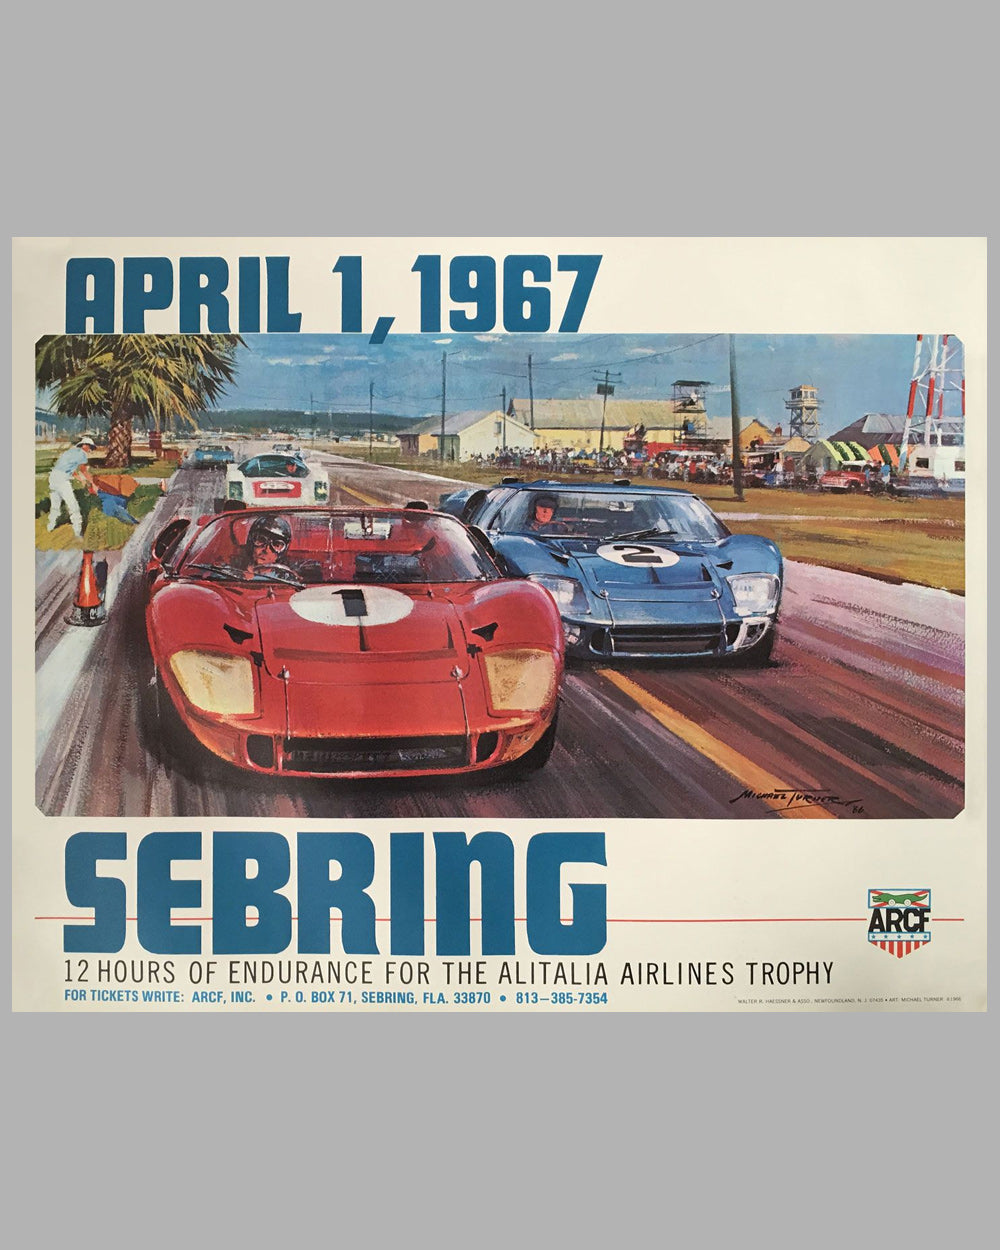 1967 - 12 Hours of Sebring original event poster by Michael Turner